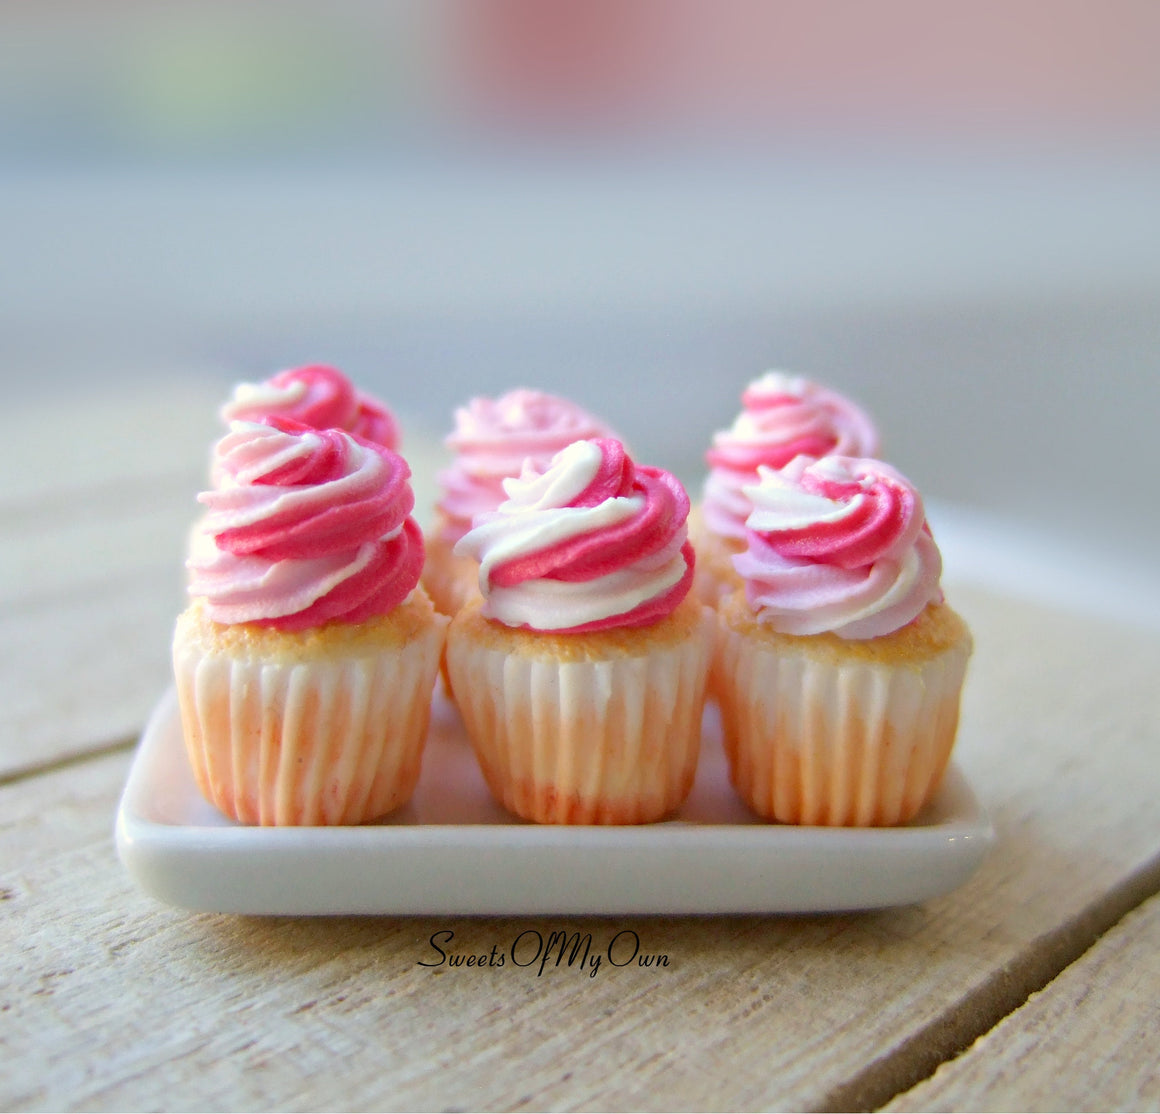 Miniature Strawberry + Vanilla Cupcakes 1:12 Scale - SweetsOfMyOwn